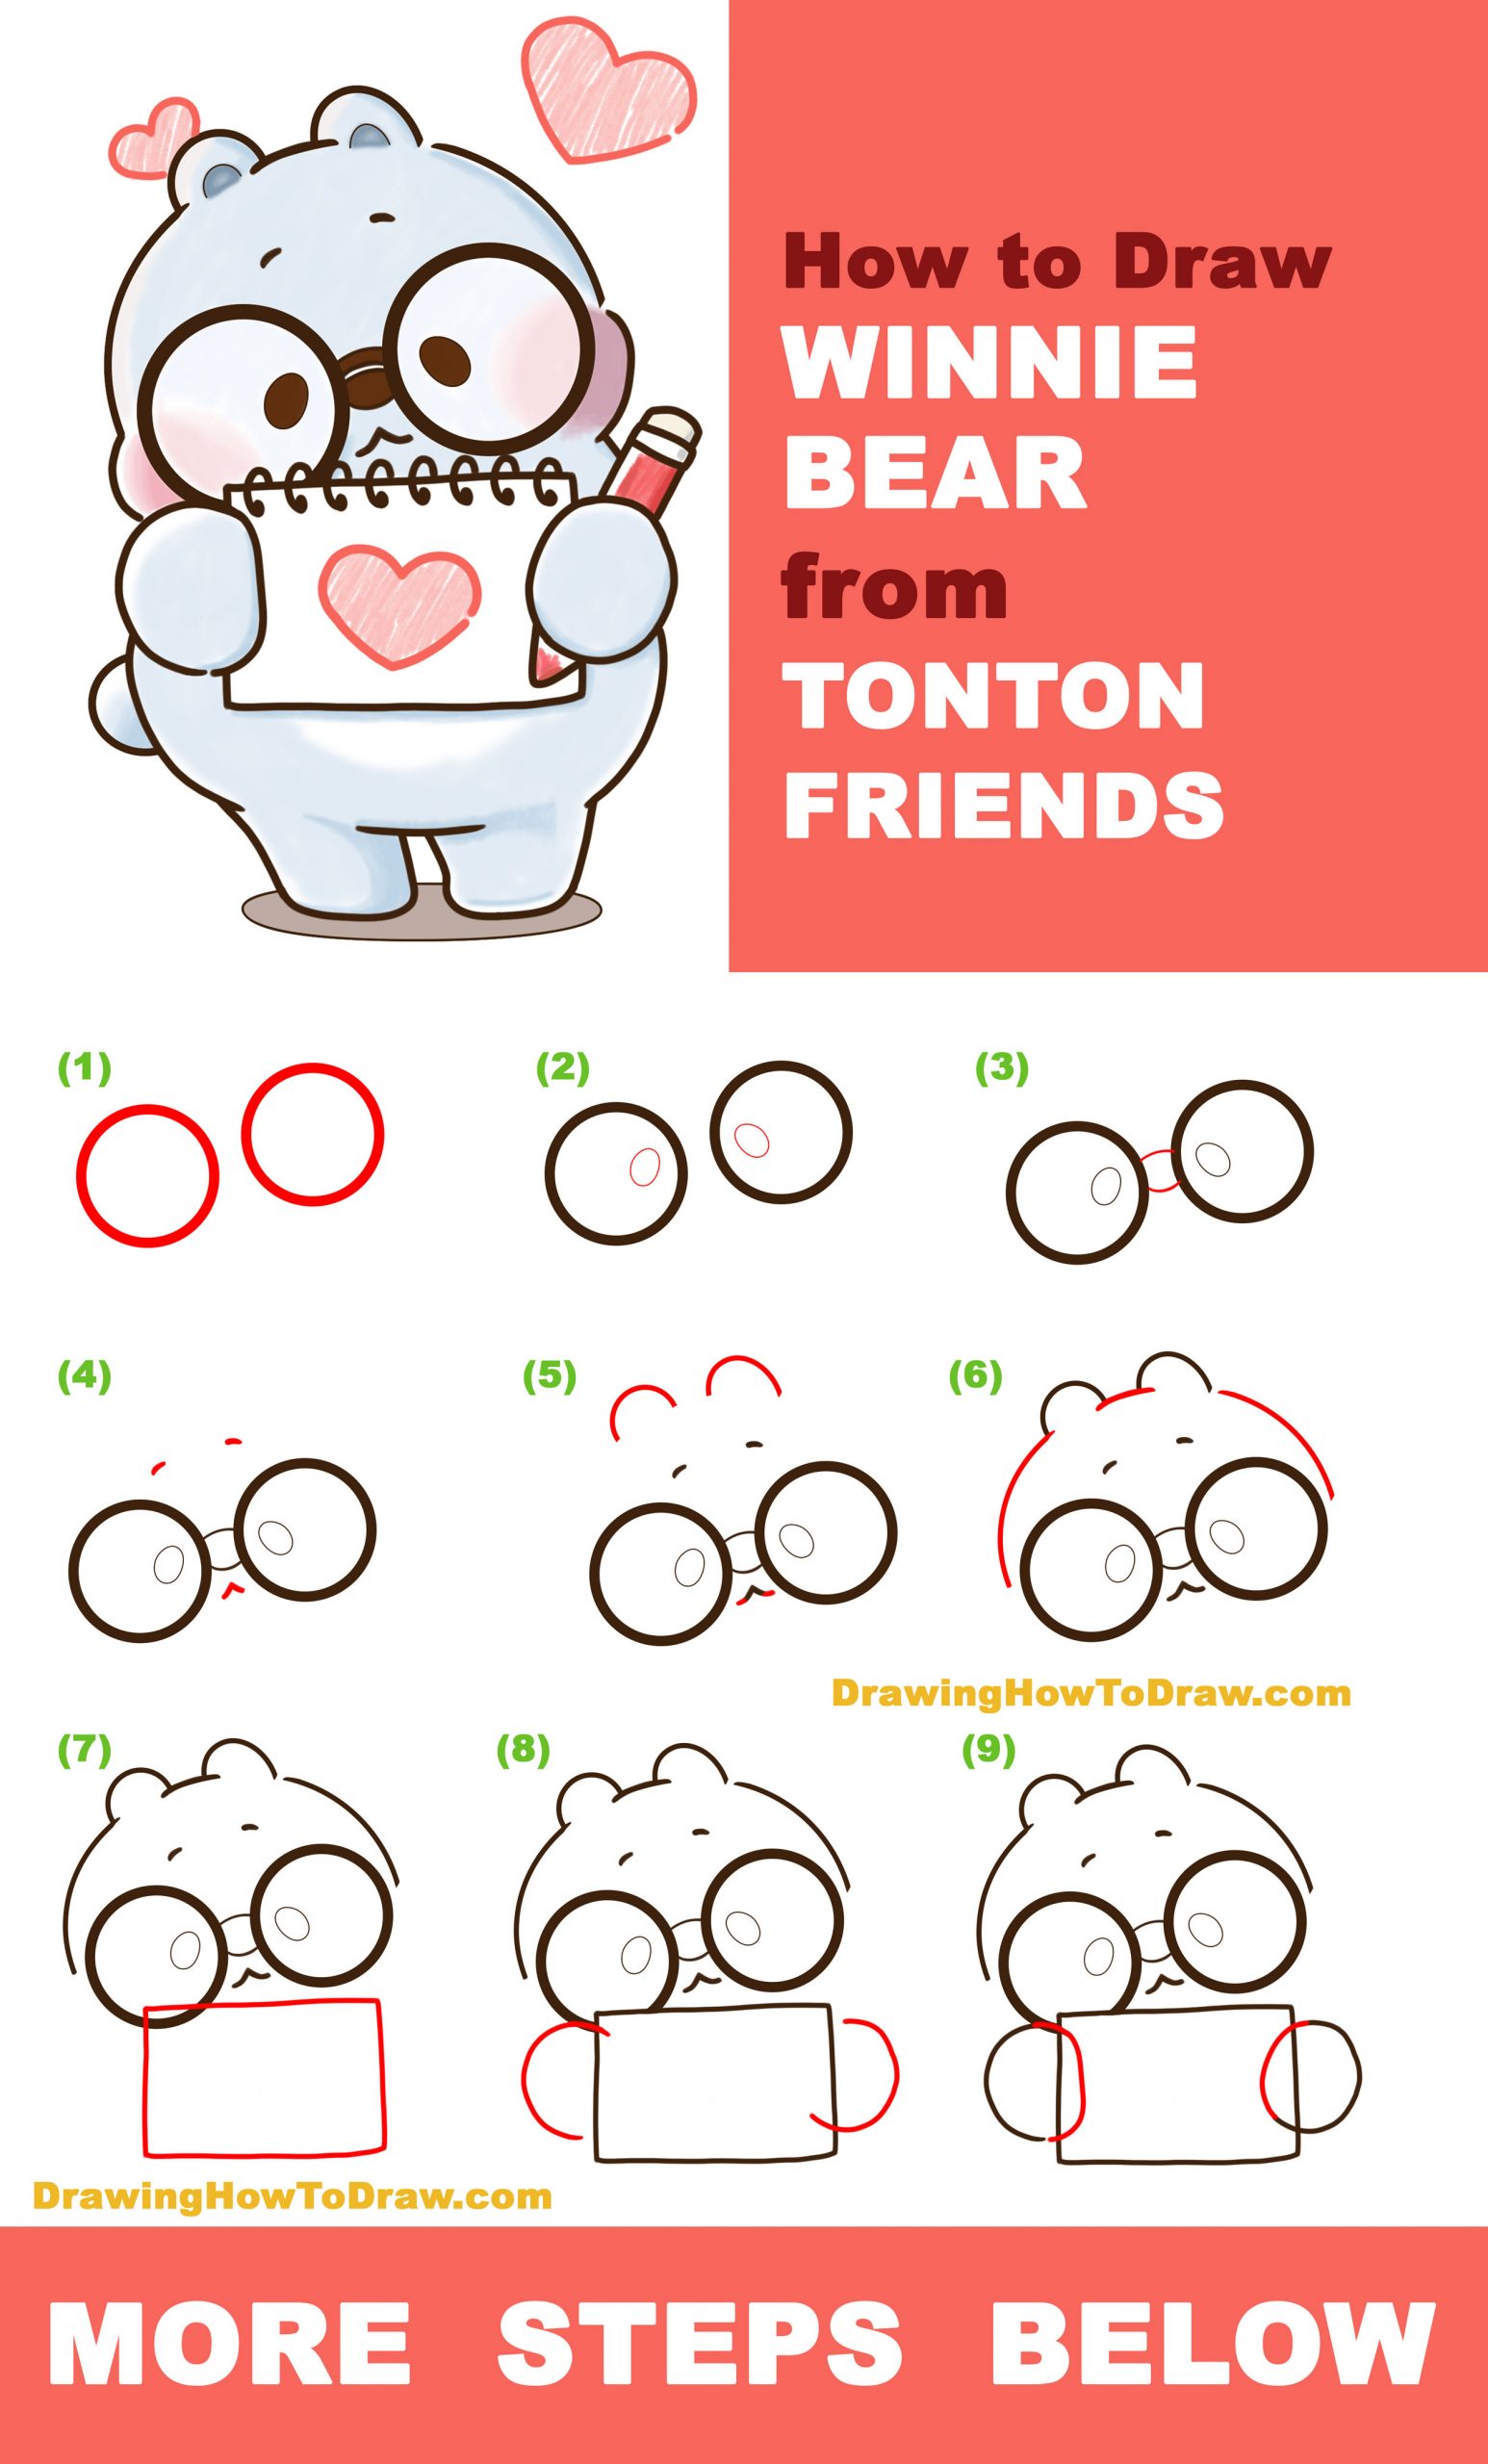 How to Draw Winnie from TonTon Friends